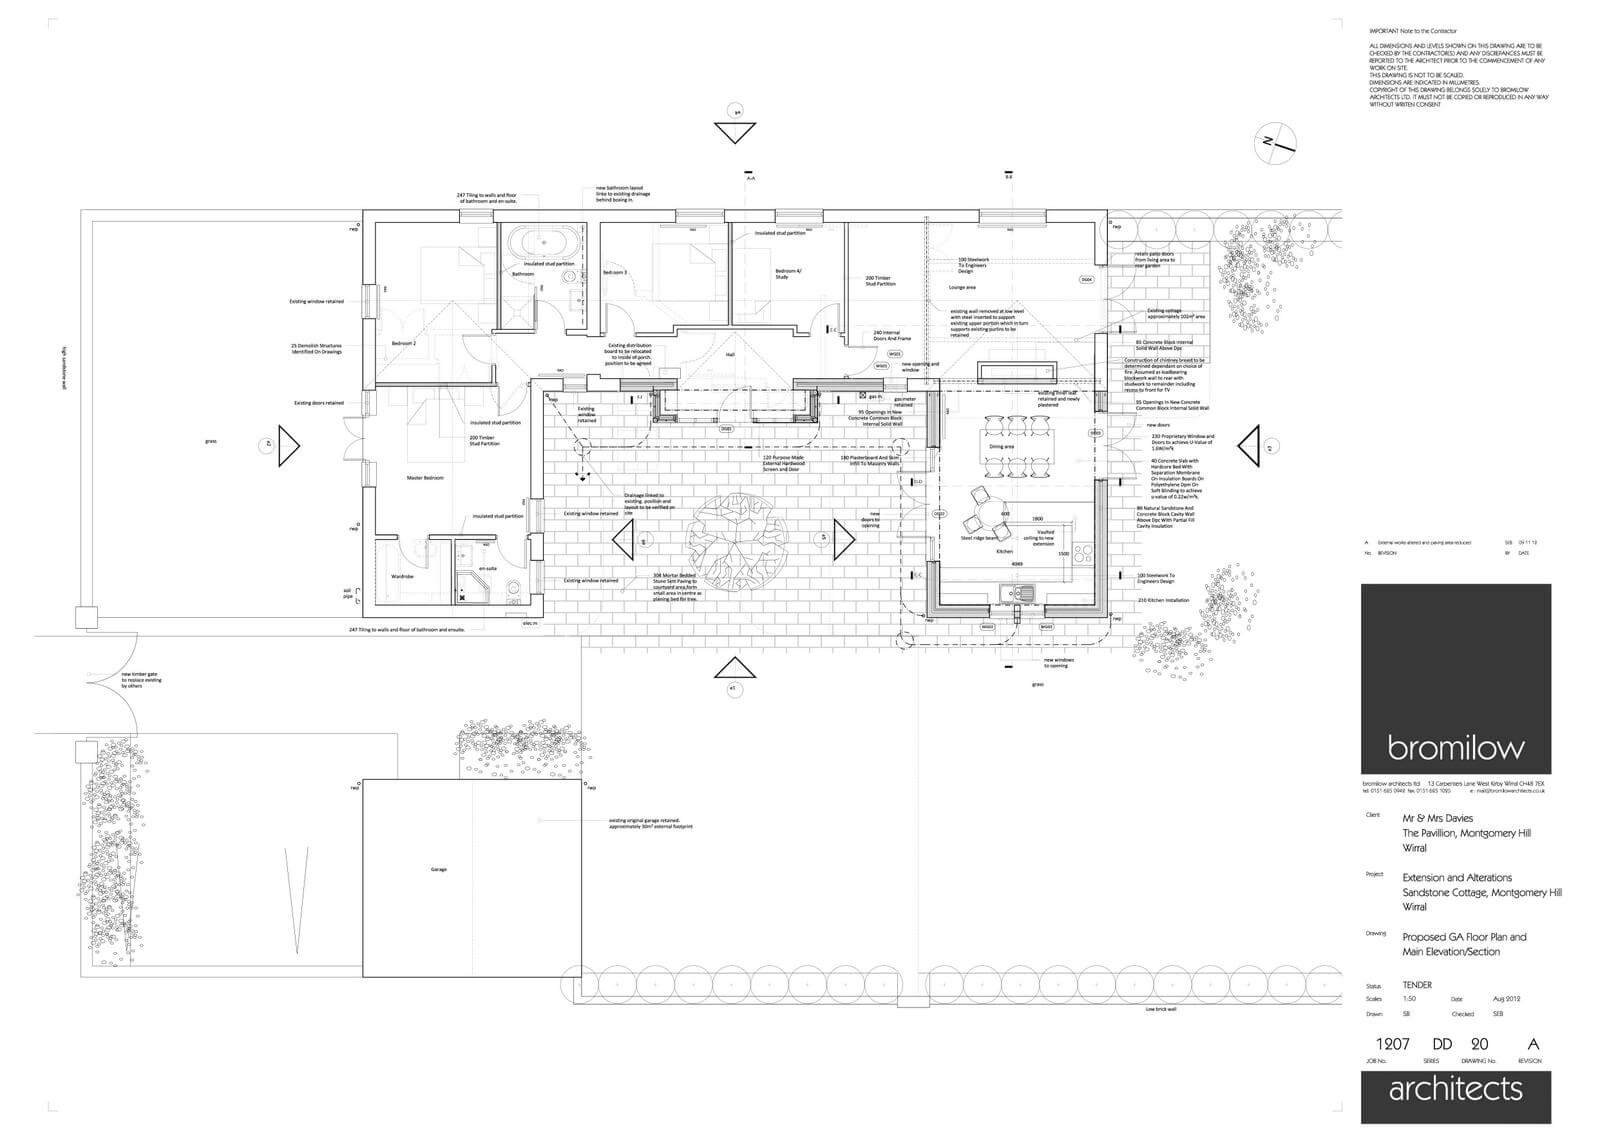 1207 DD 020A - Sandstone Cottage - Proposed GA Plan (A1)